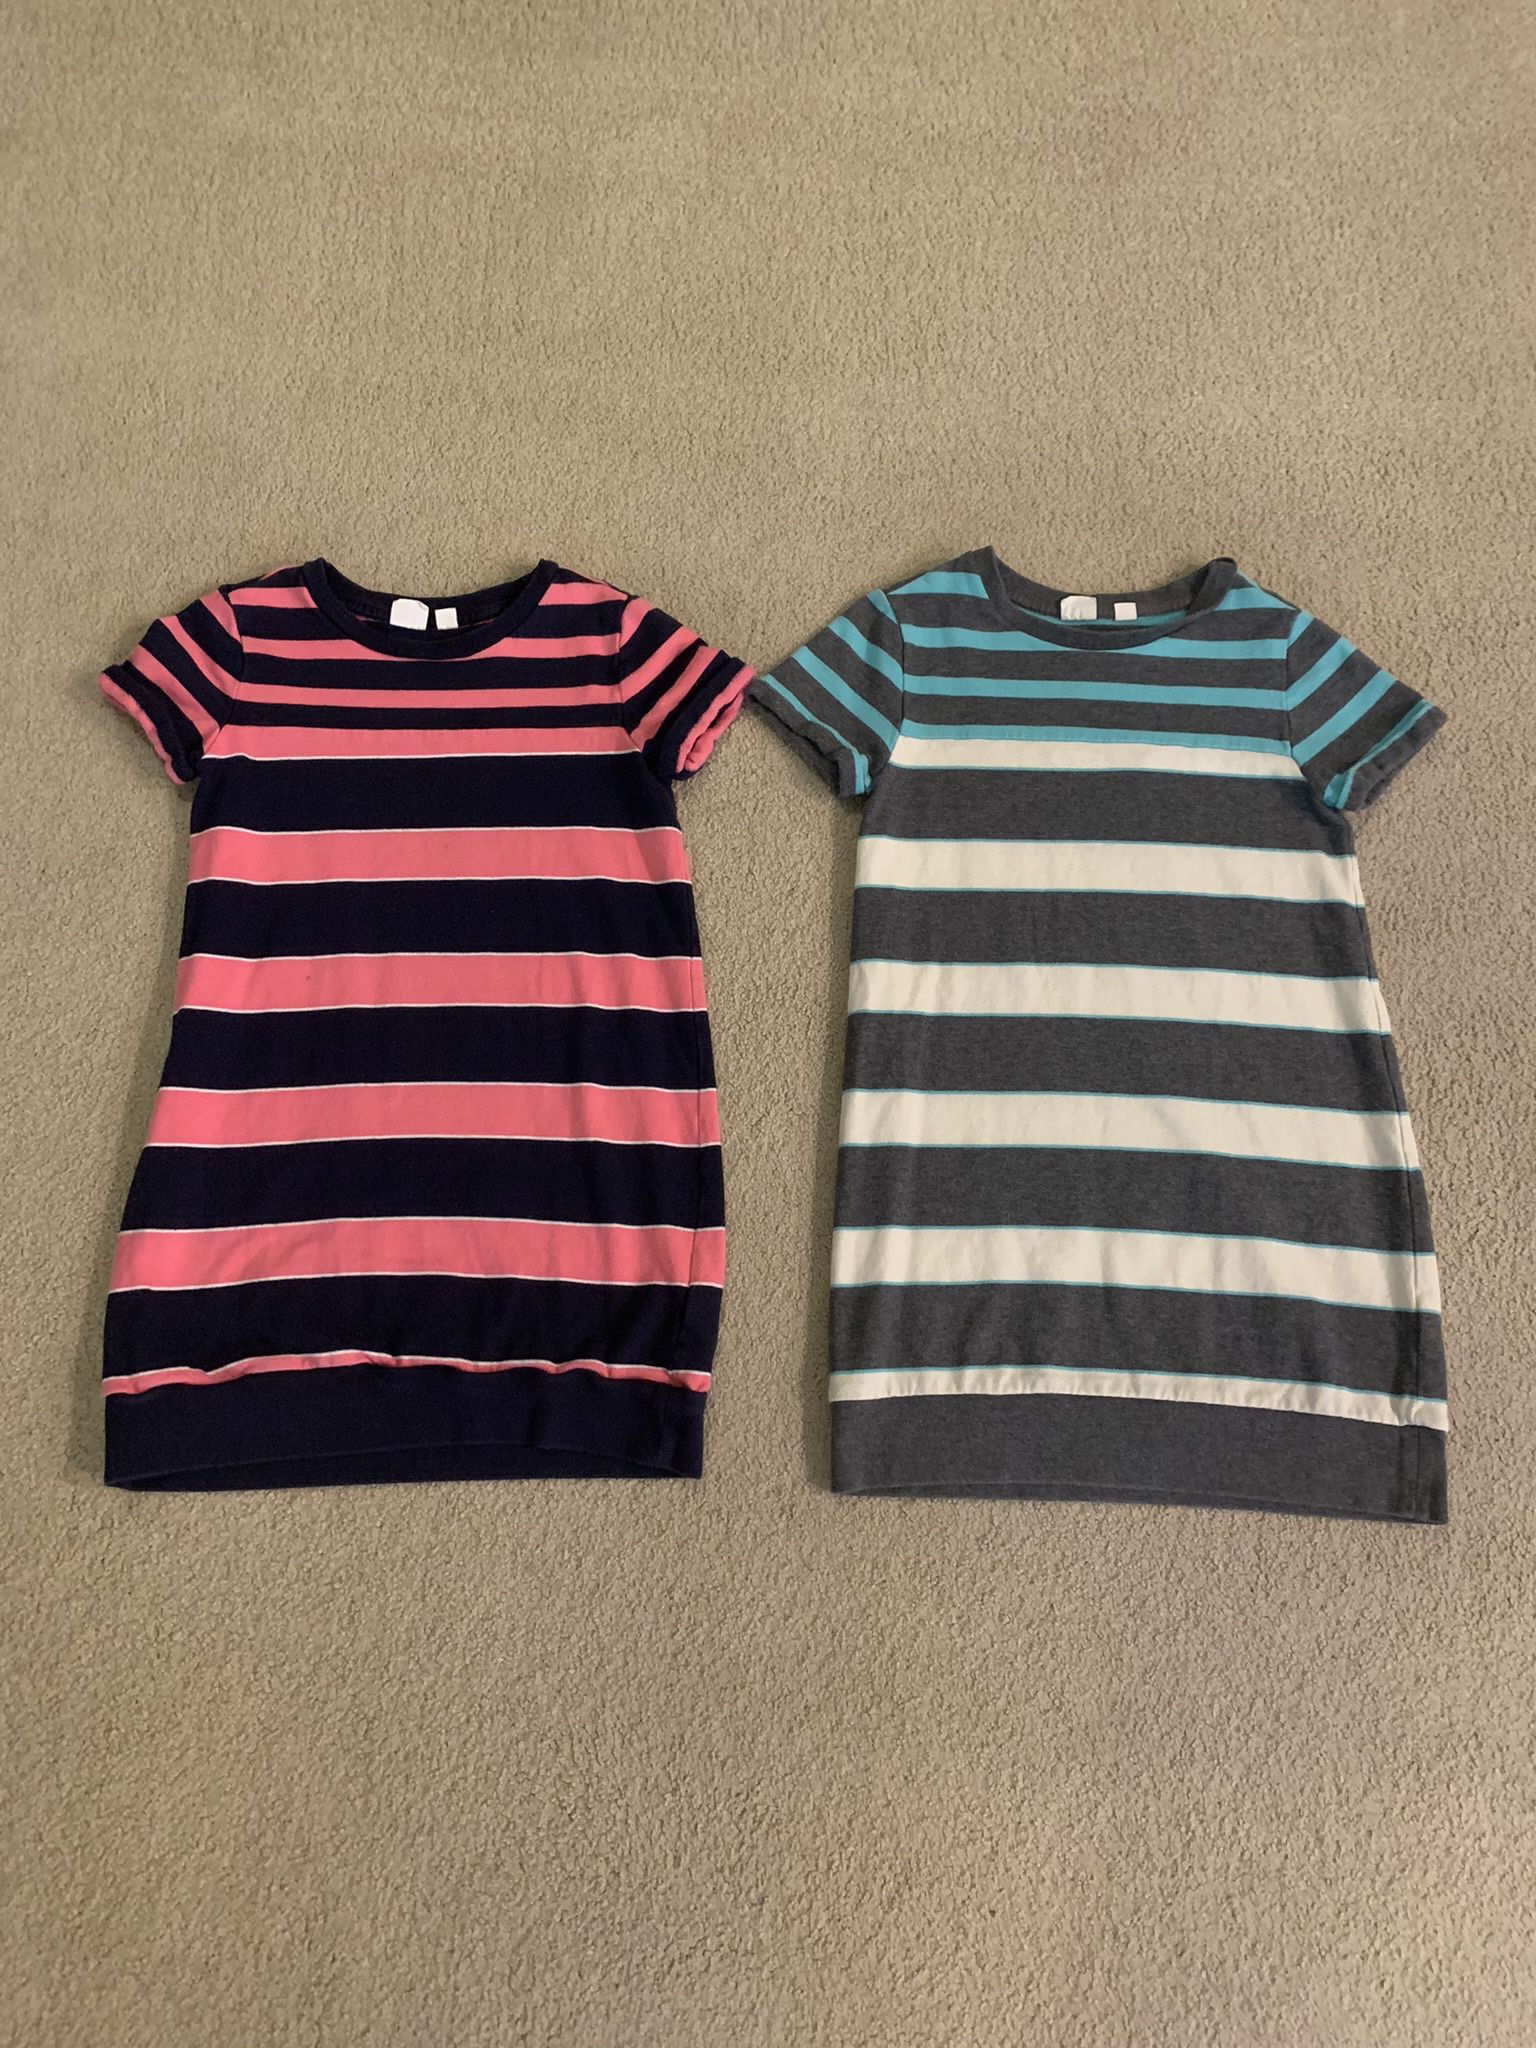 Gap Kids Girls Tunic/dresses Size M (8)